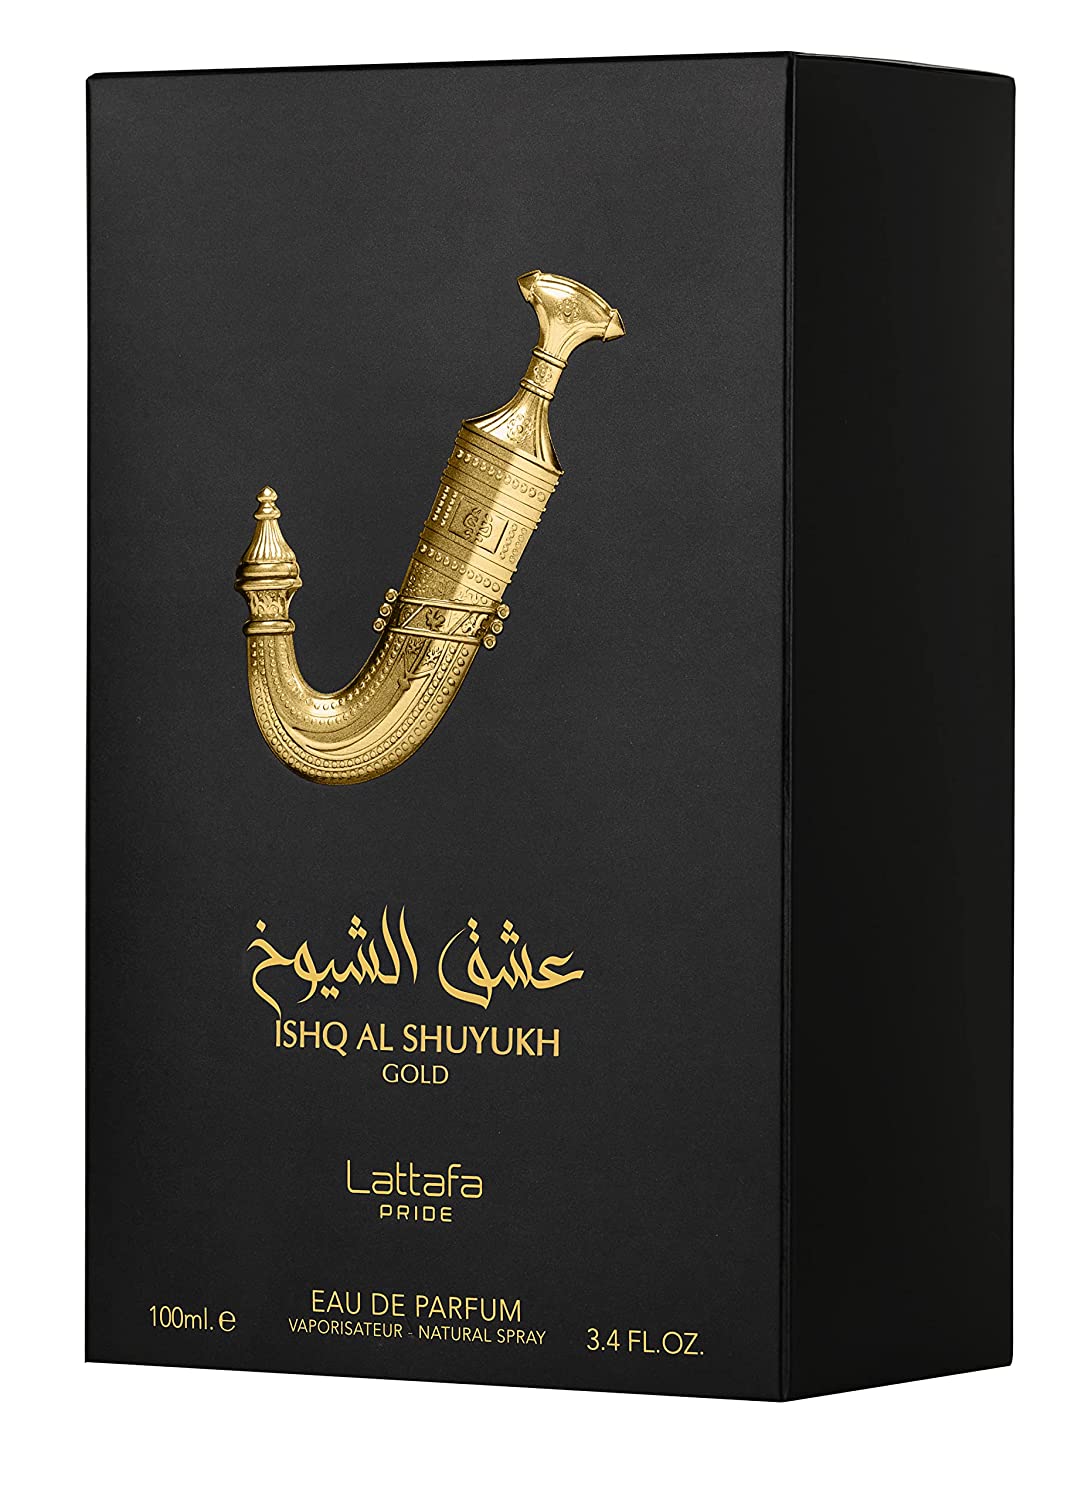 Ishq Al Shuyukh Gold EDP - 100mL (3.4 oz) by Lattafa Pride - Intense Oud